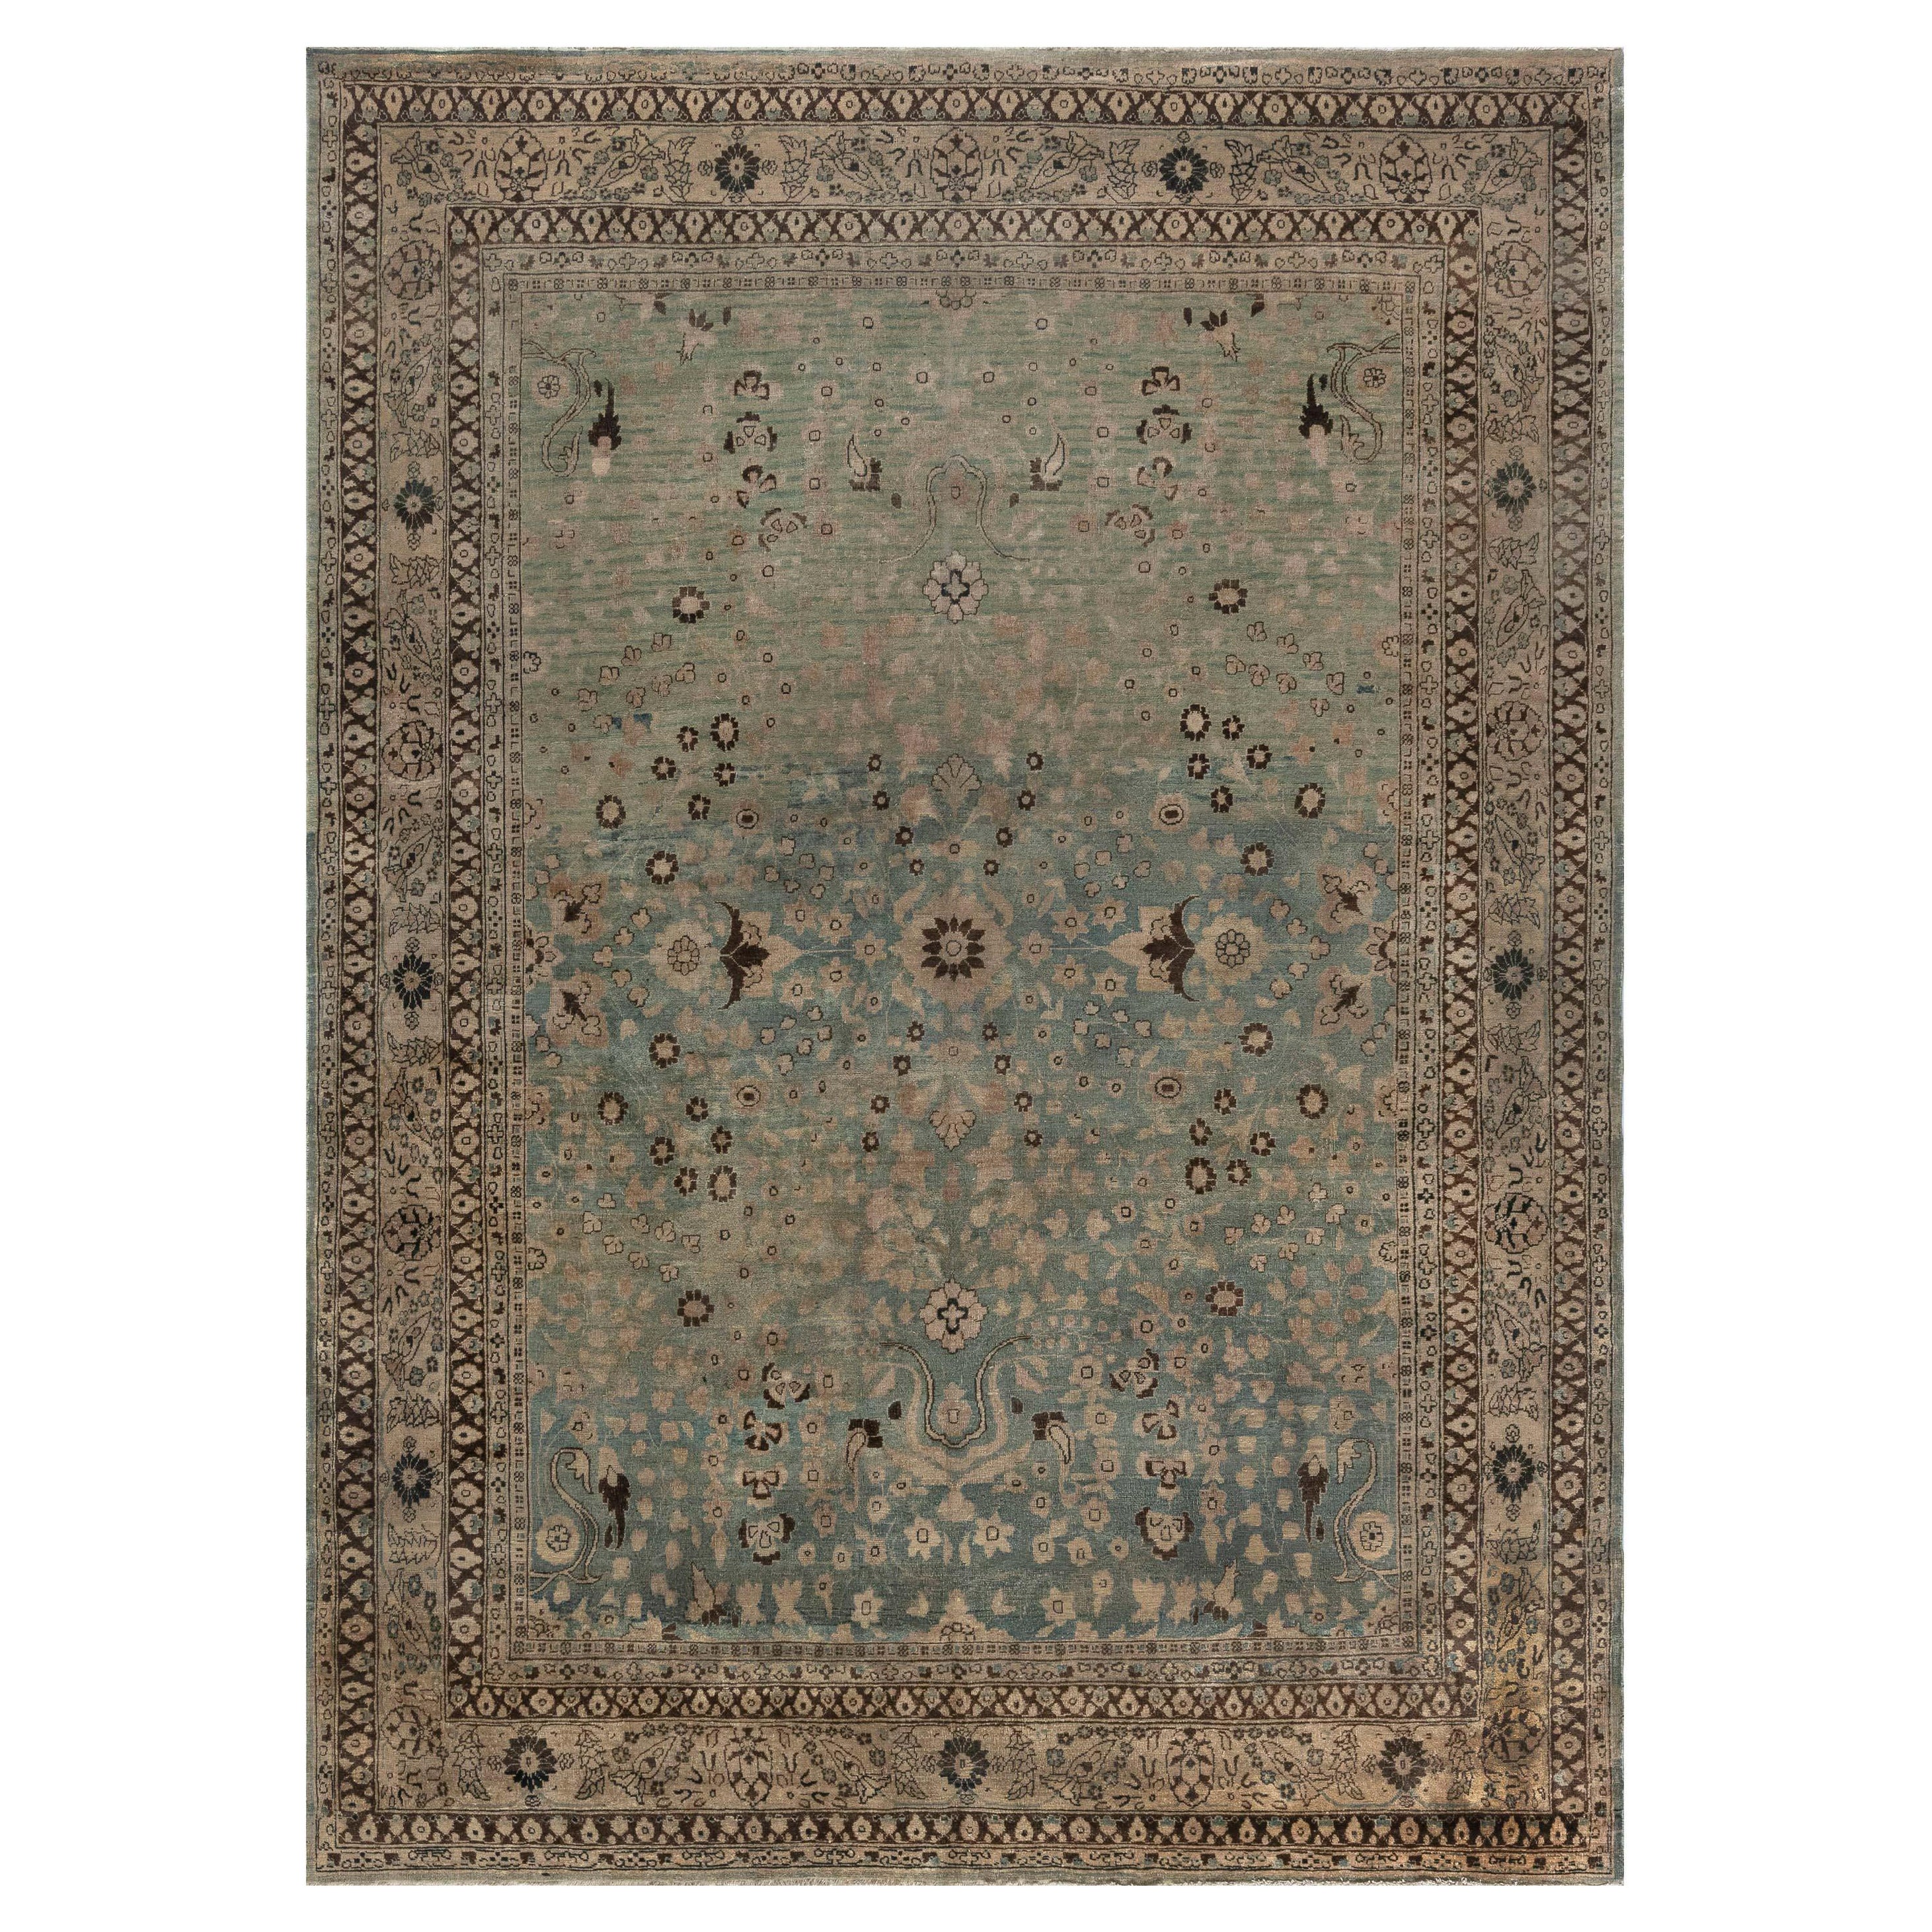 19th Century Persian Tabriz Carpet